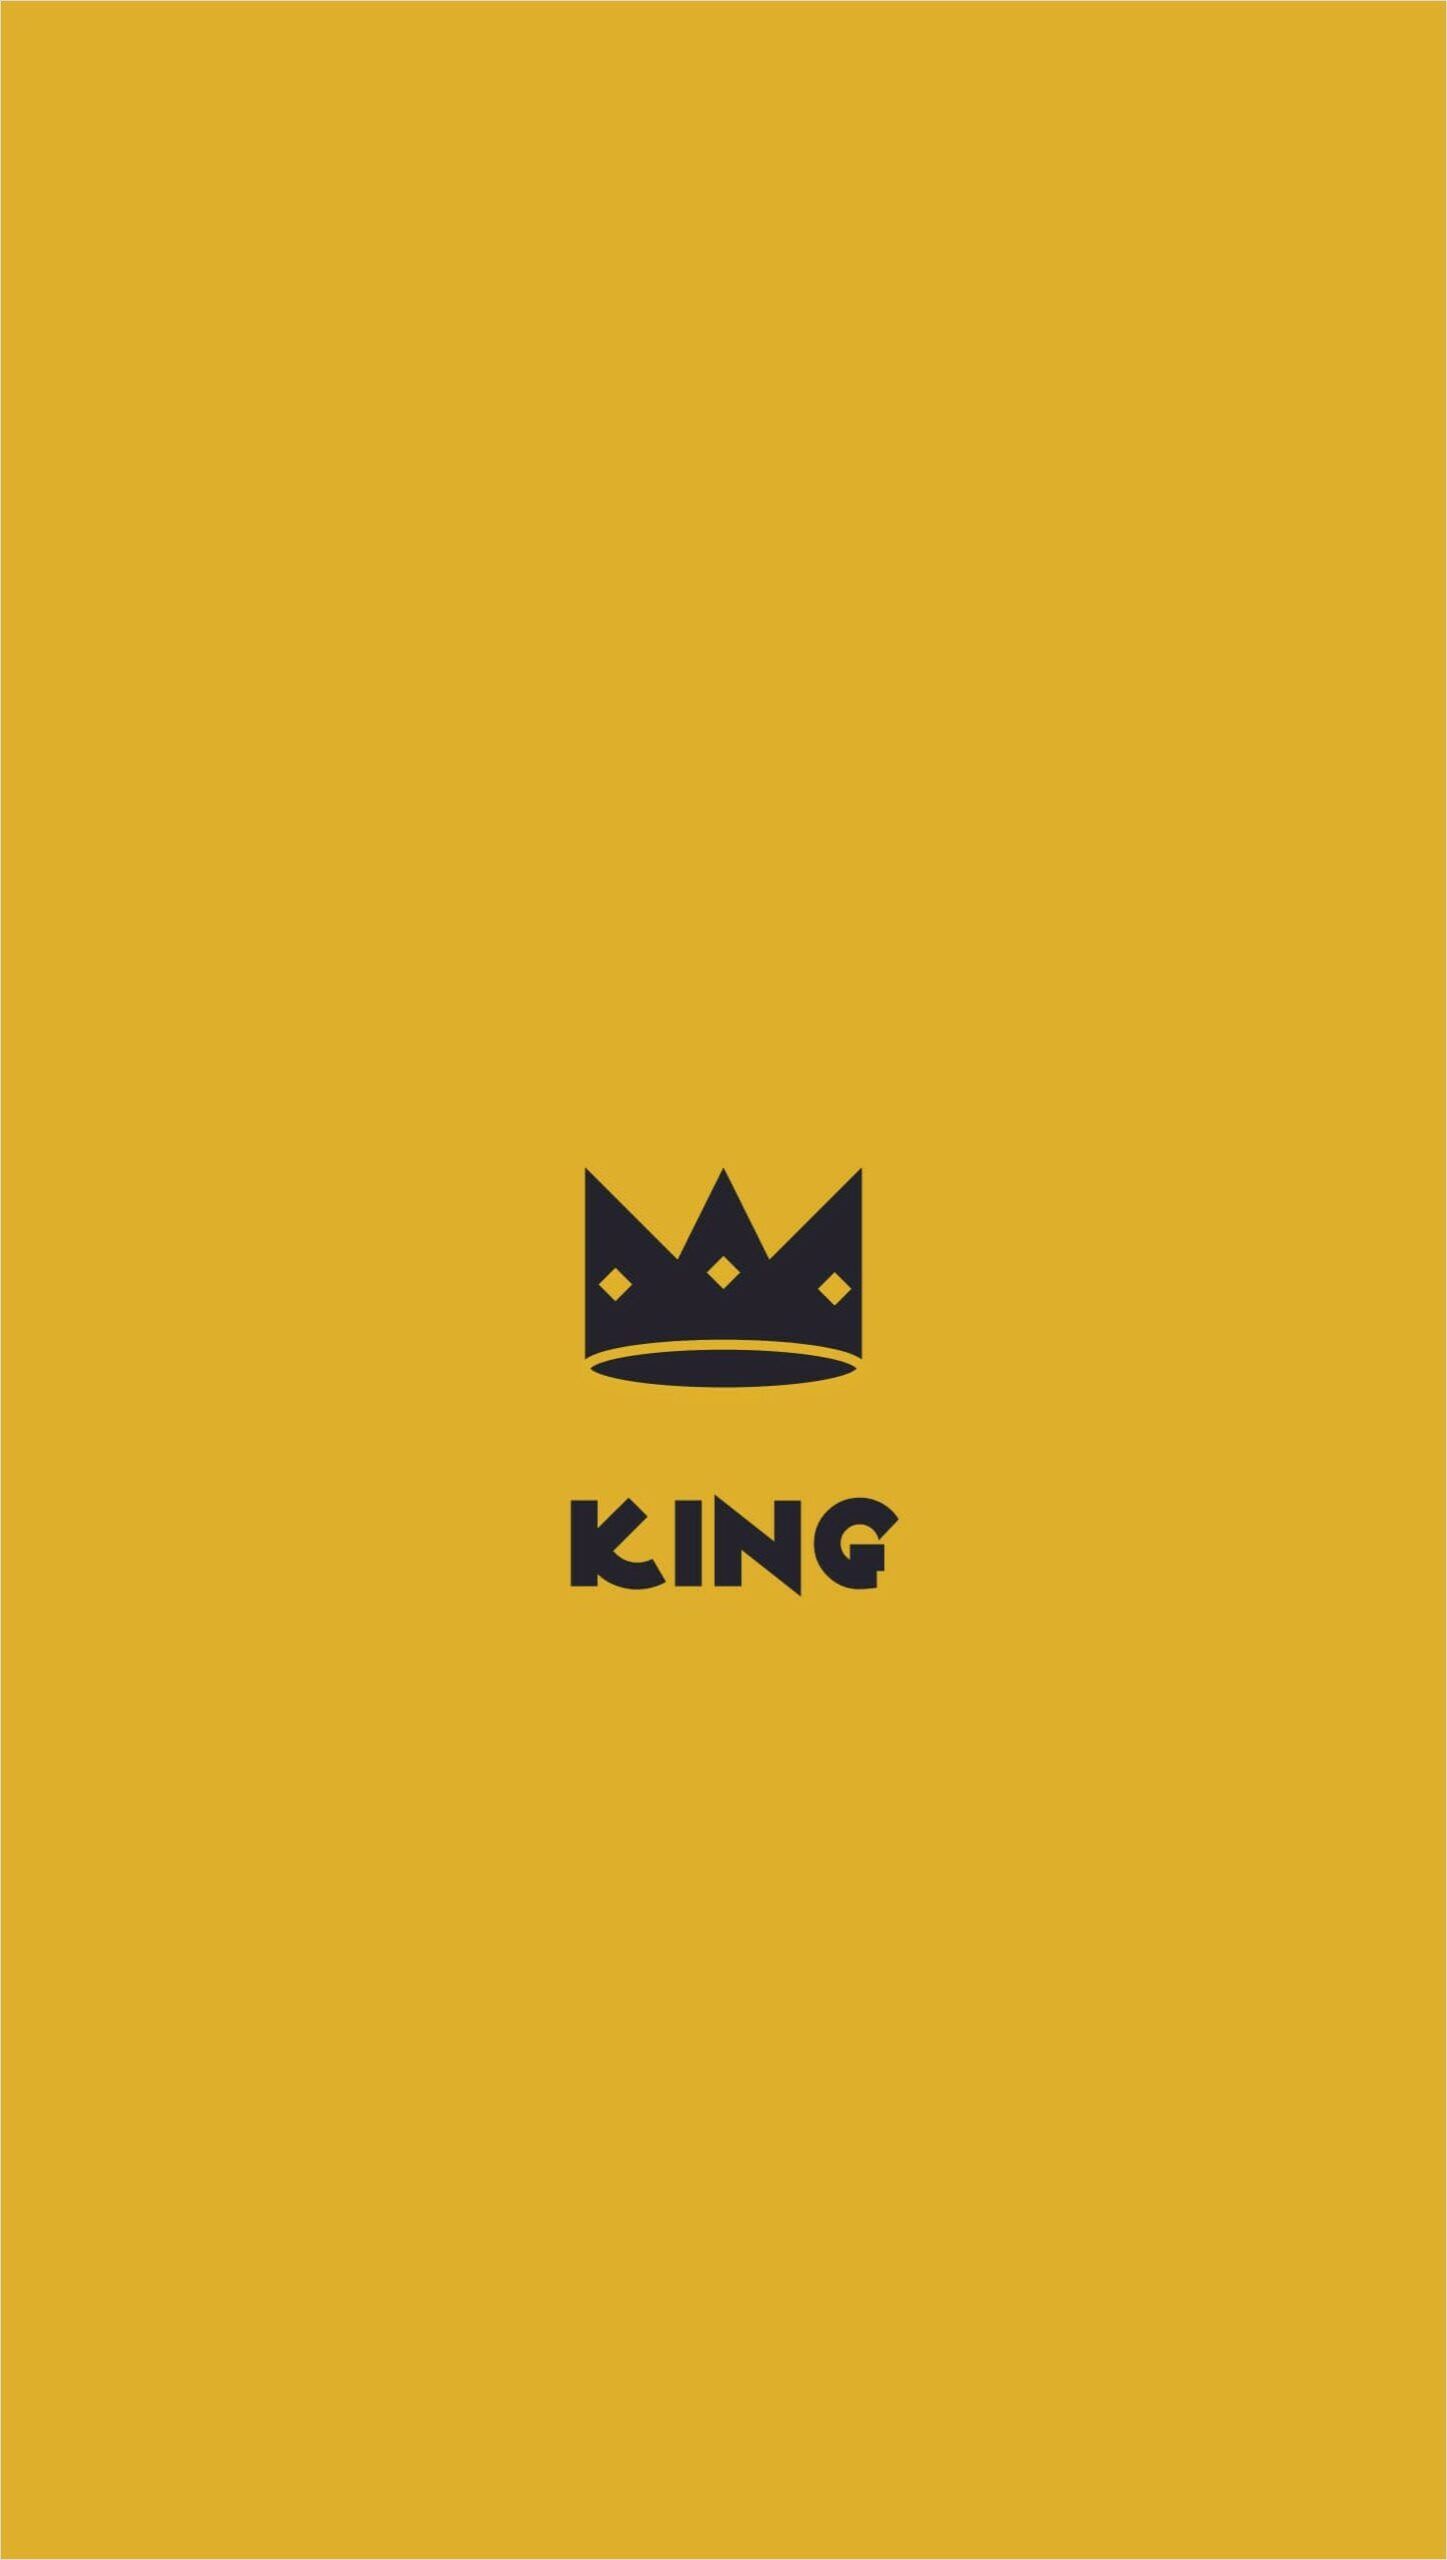 4k Wallpaper King In Yellow. Art wallpaper iphone